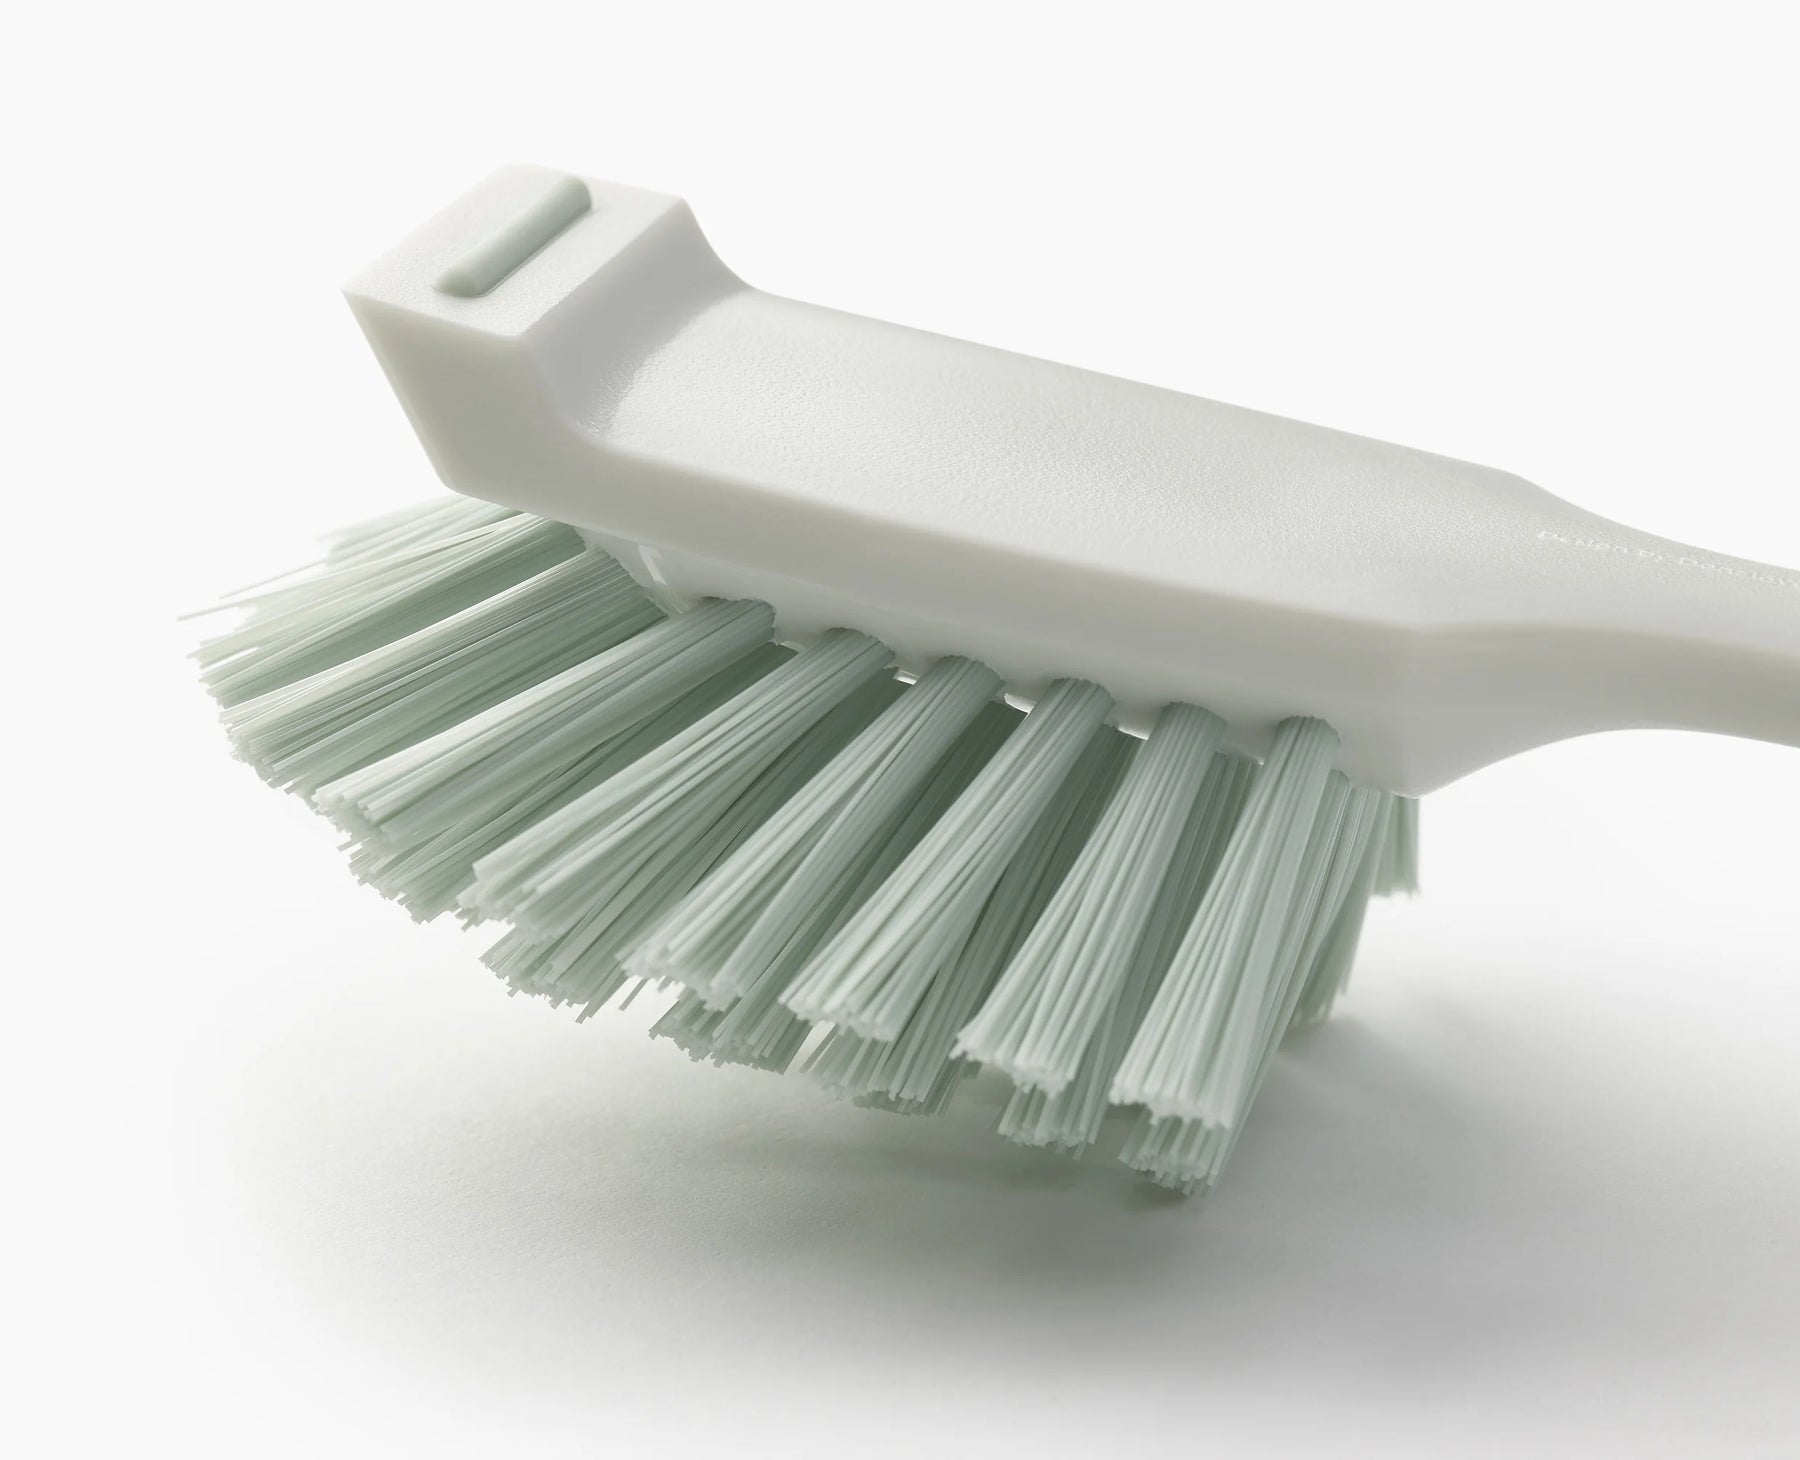 Wash up with Joseph Joseph's CleanTech Dish Brush, now $7 (Reg. up